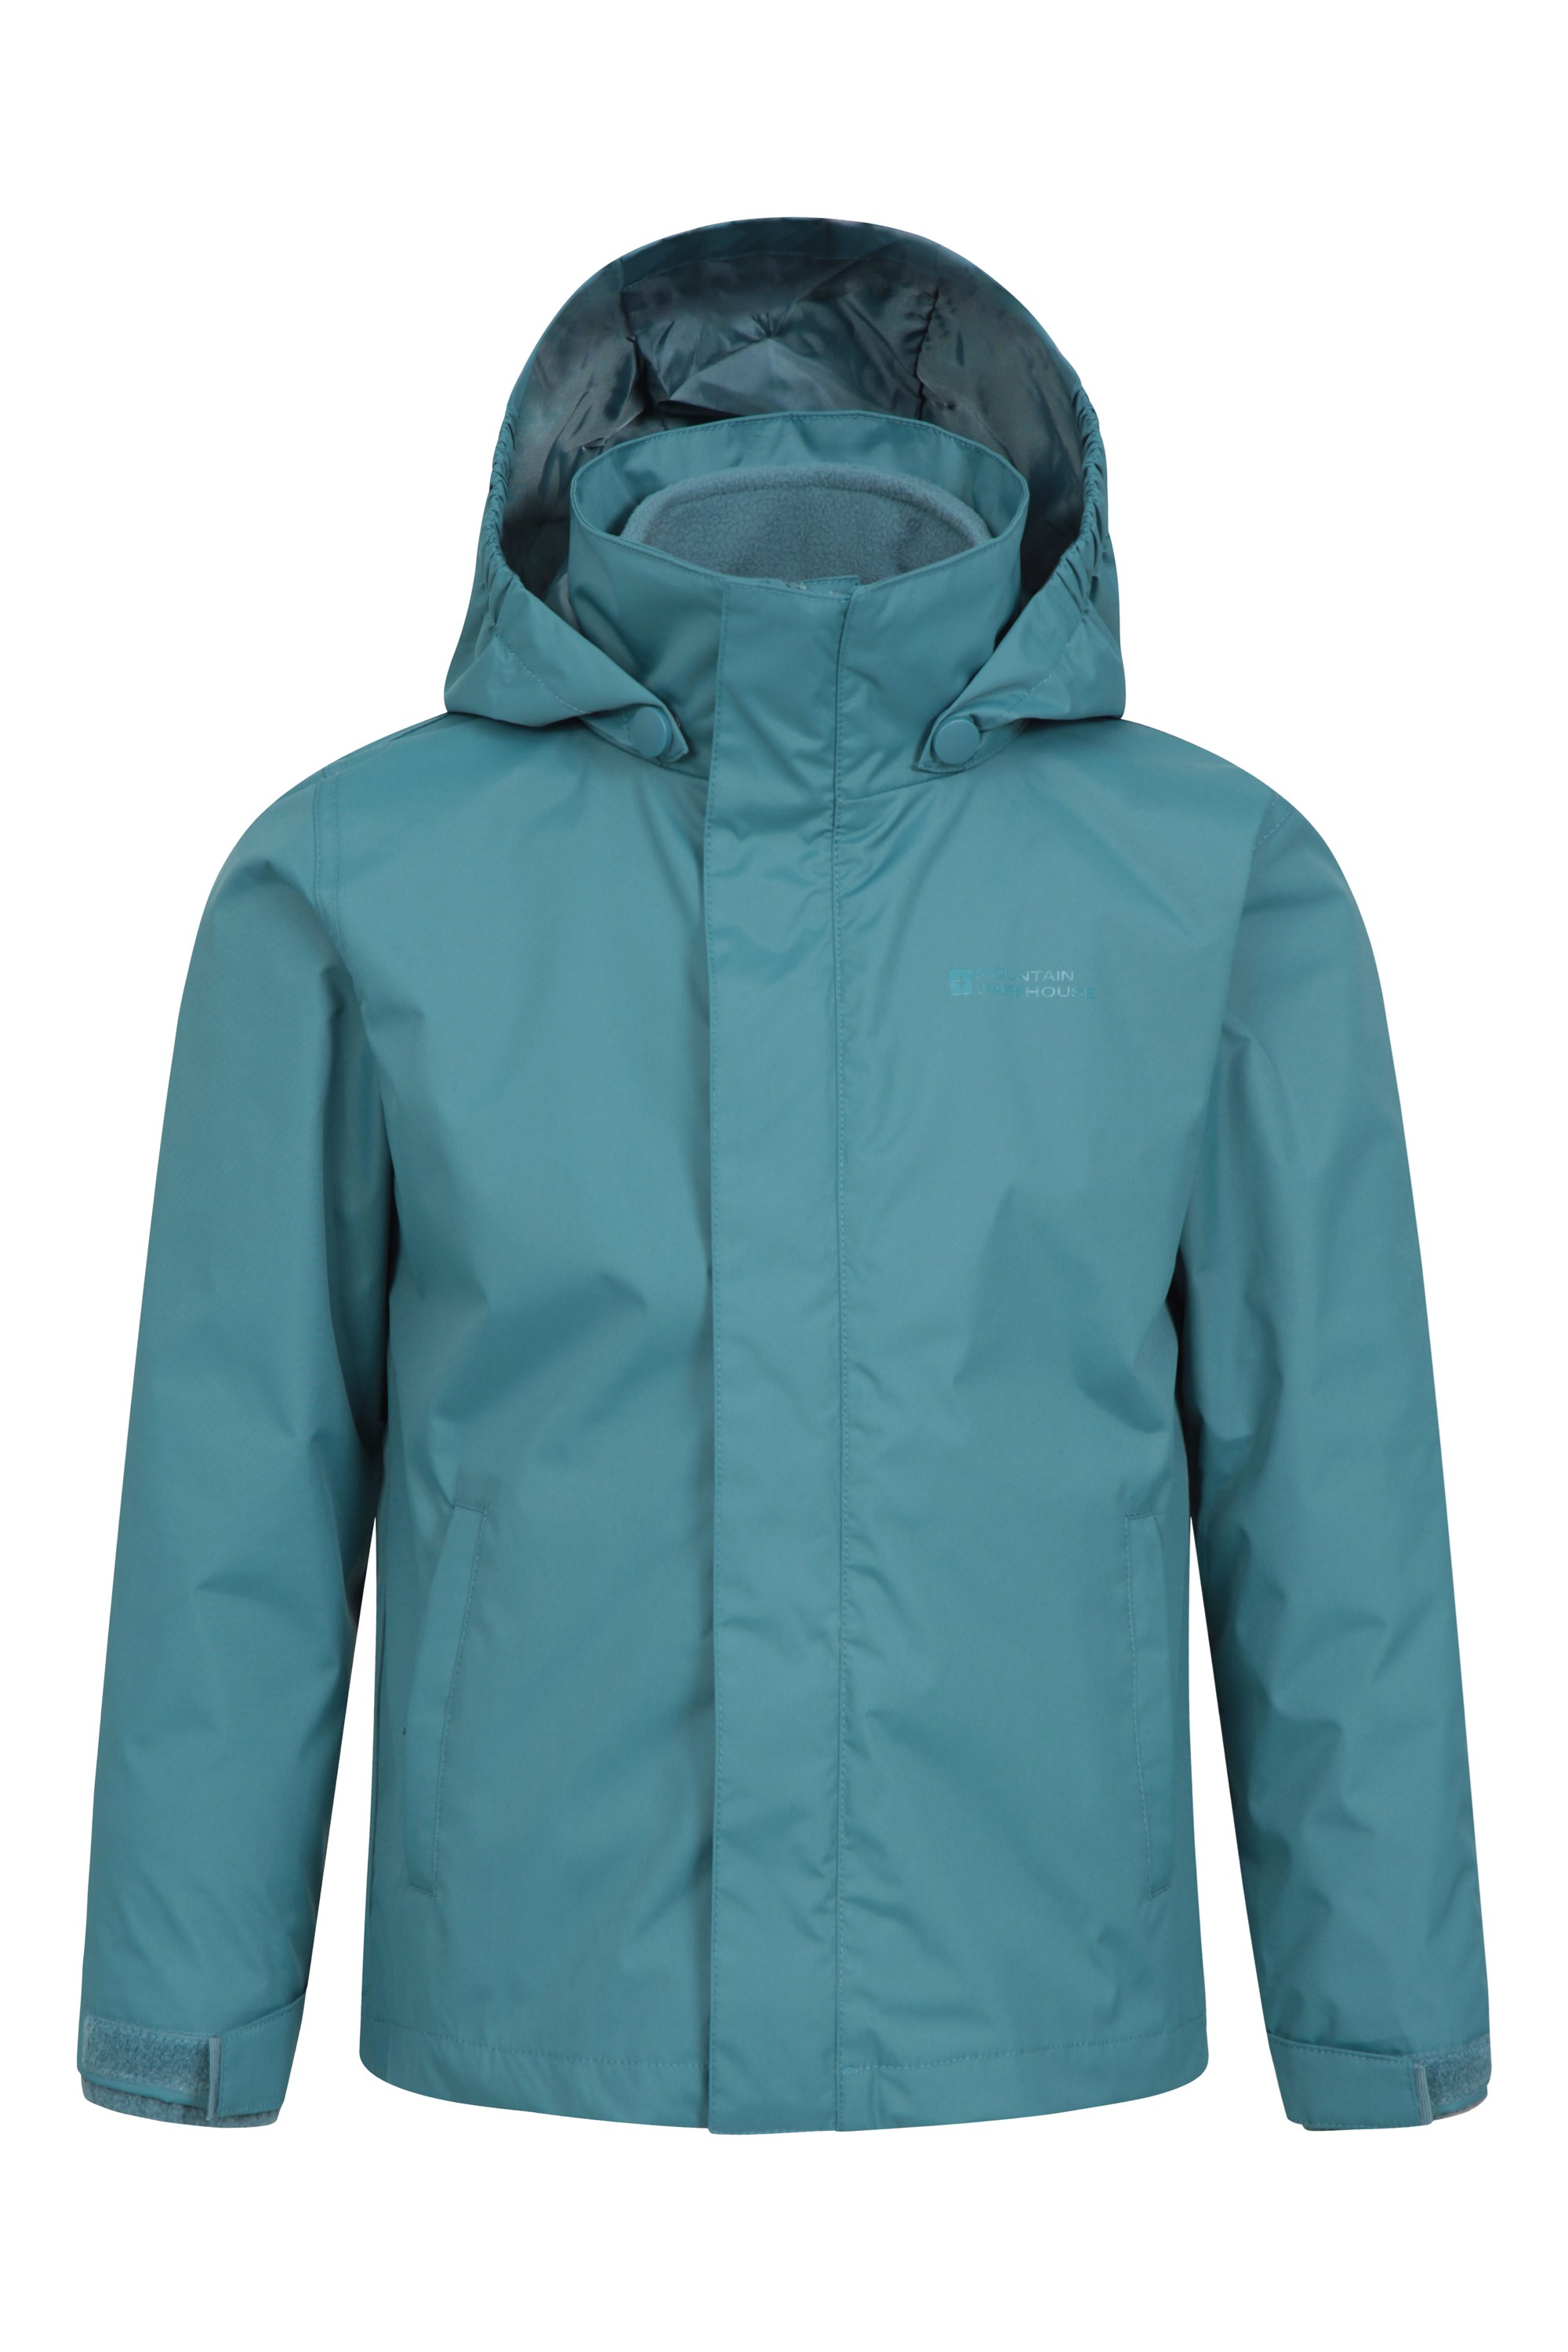 100% Cotton Walking Best for Outdoors Breathable Rain Jacket Hiking 2 Front Zip Pockets Raincoat Mountain Warehouse  Kids Cotton Boys Waterproof Jacket